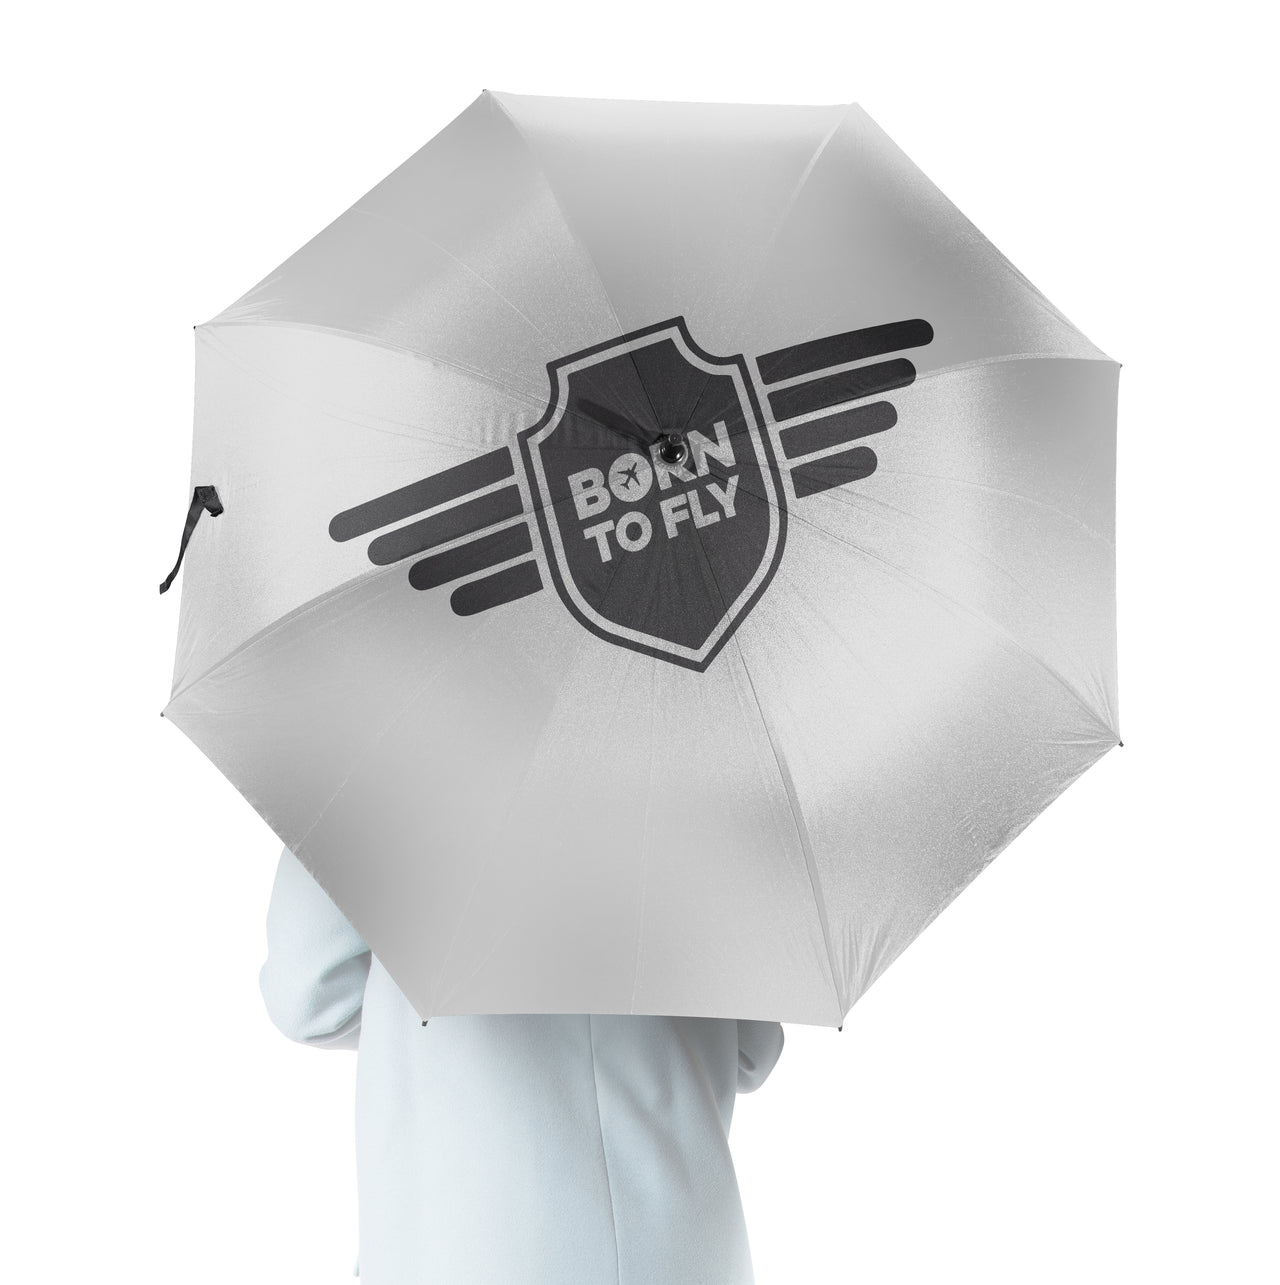 Born To Fly & Badge Designed Umbrella